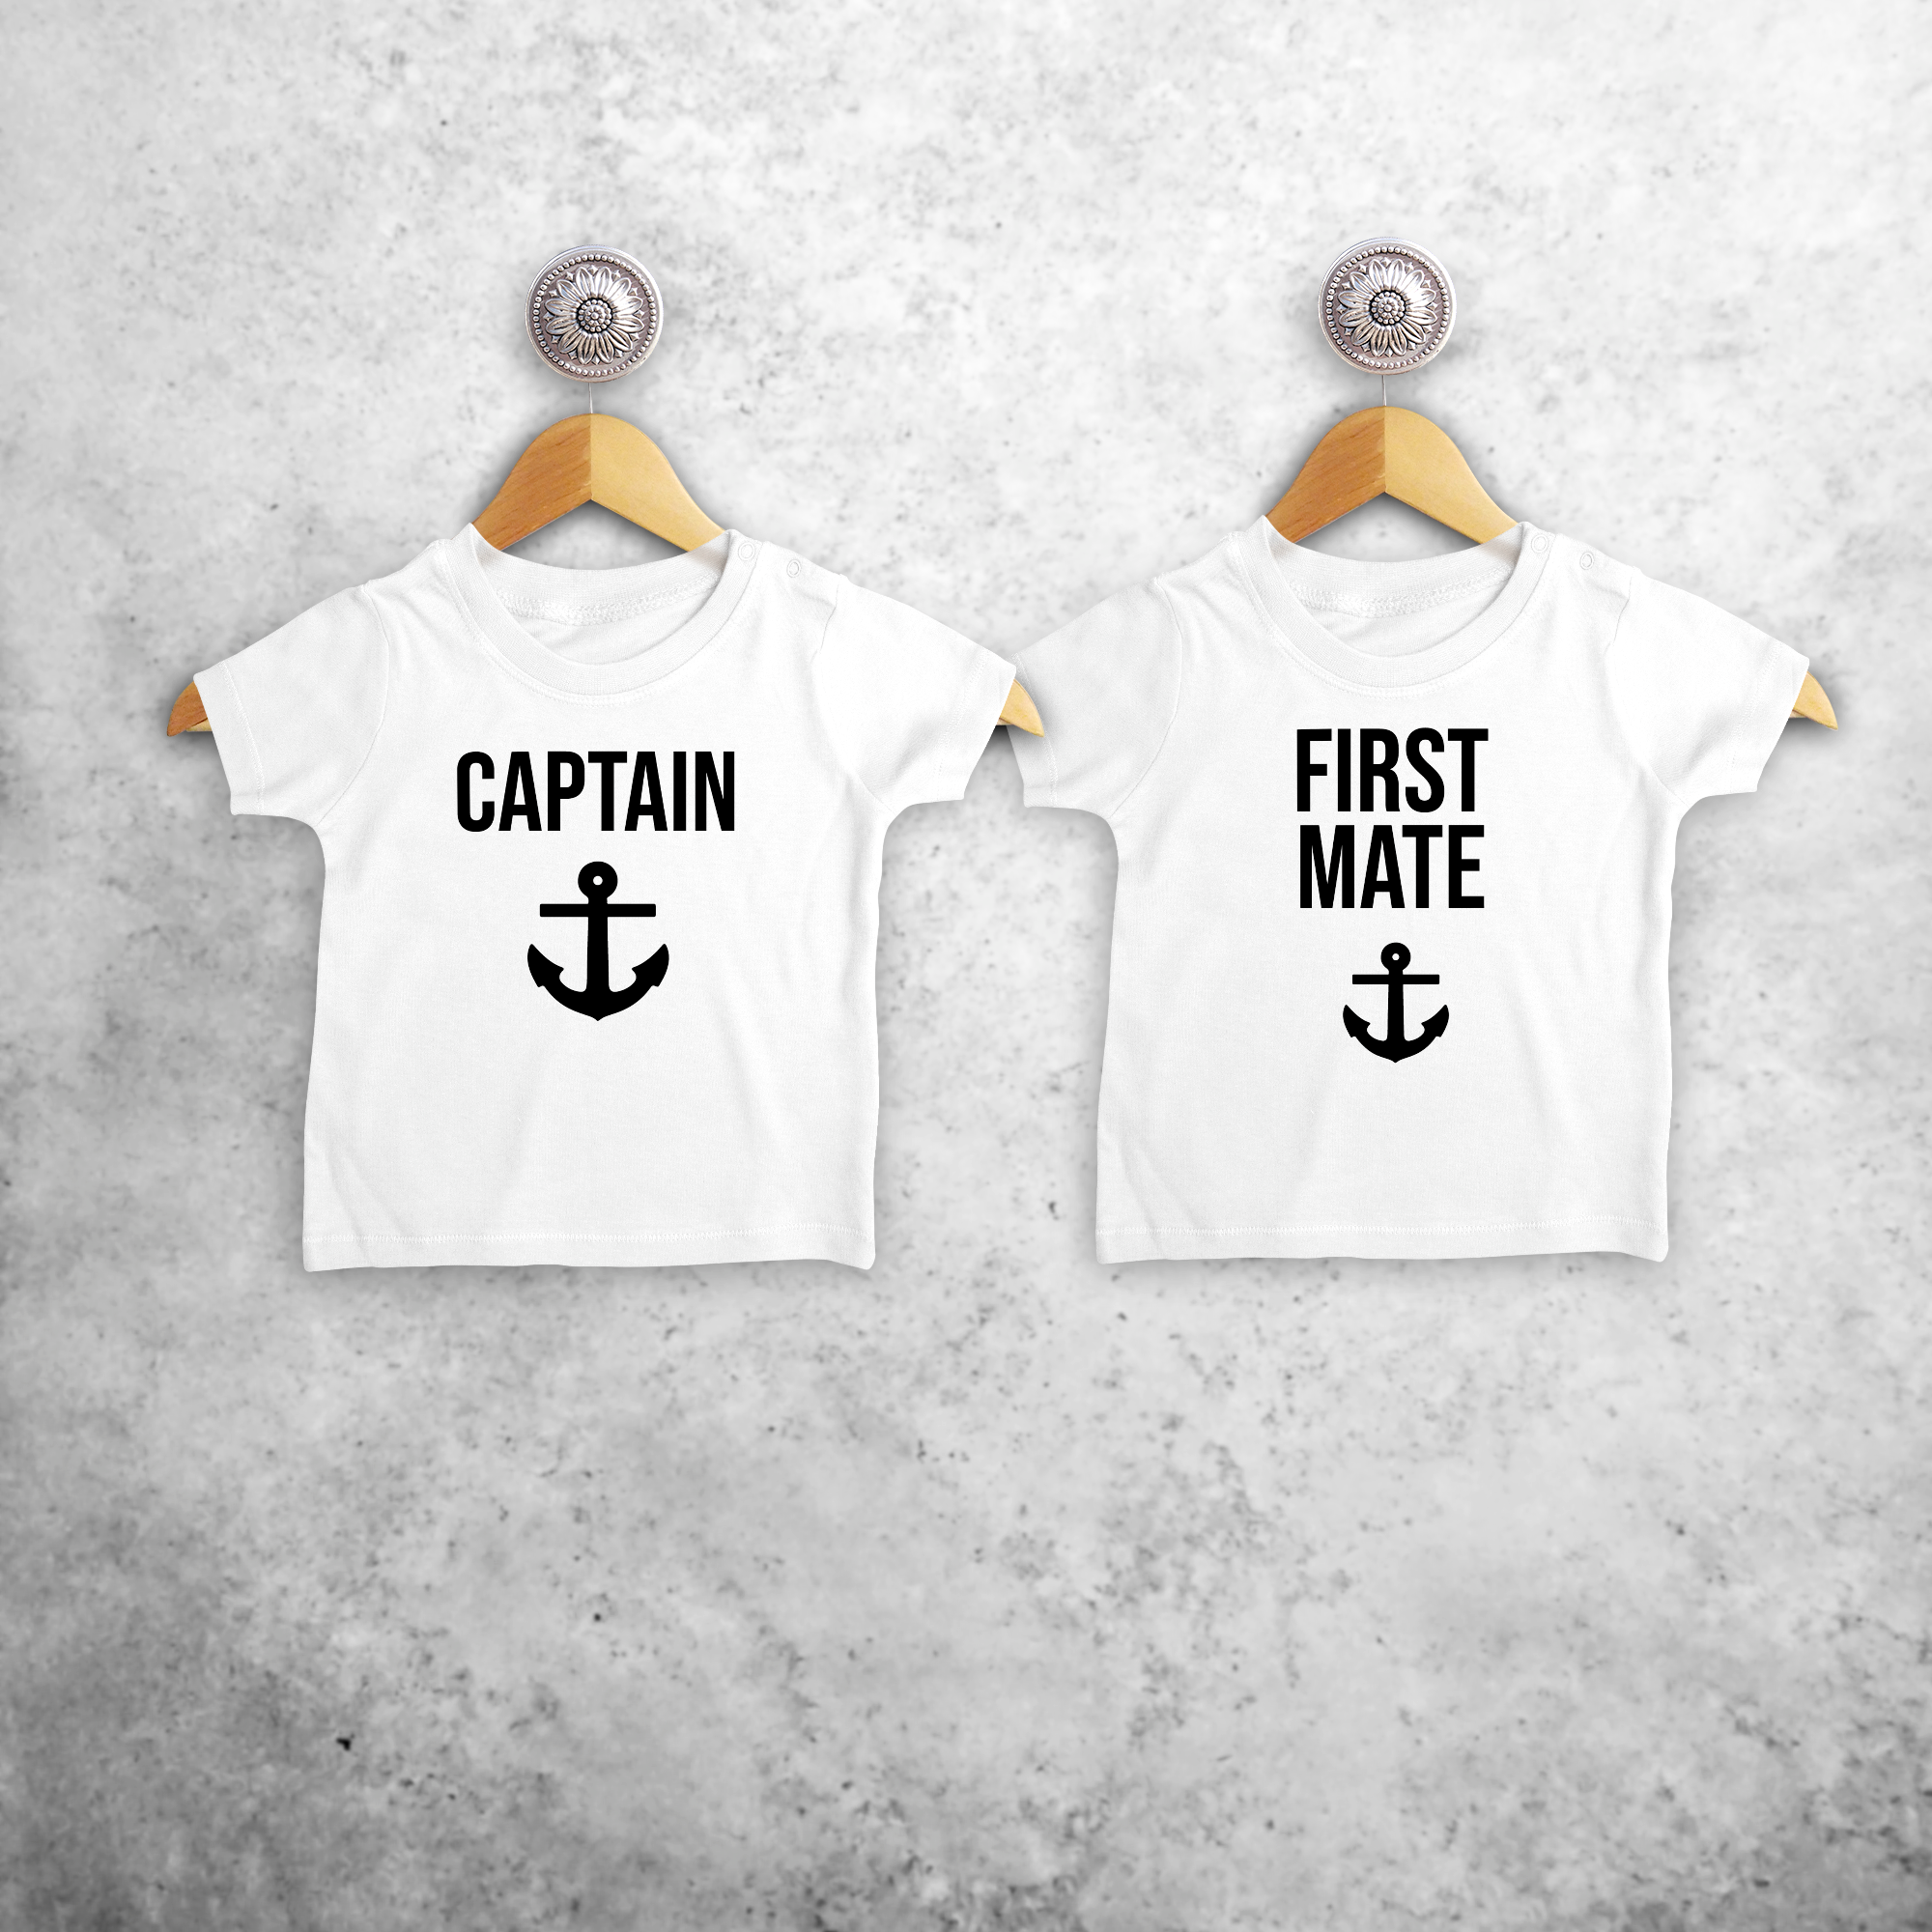 'Captain' & 'First mate' baby sibling shirts